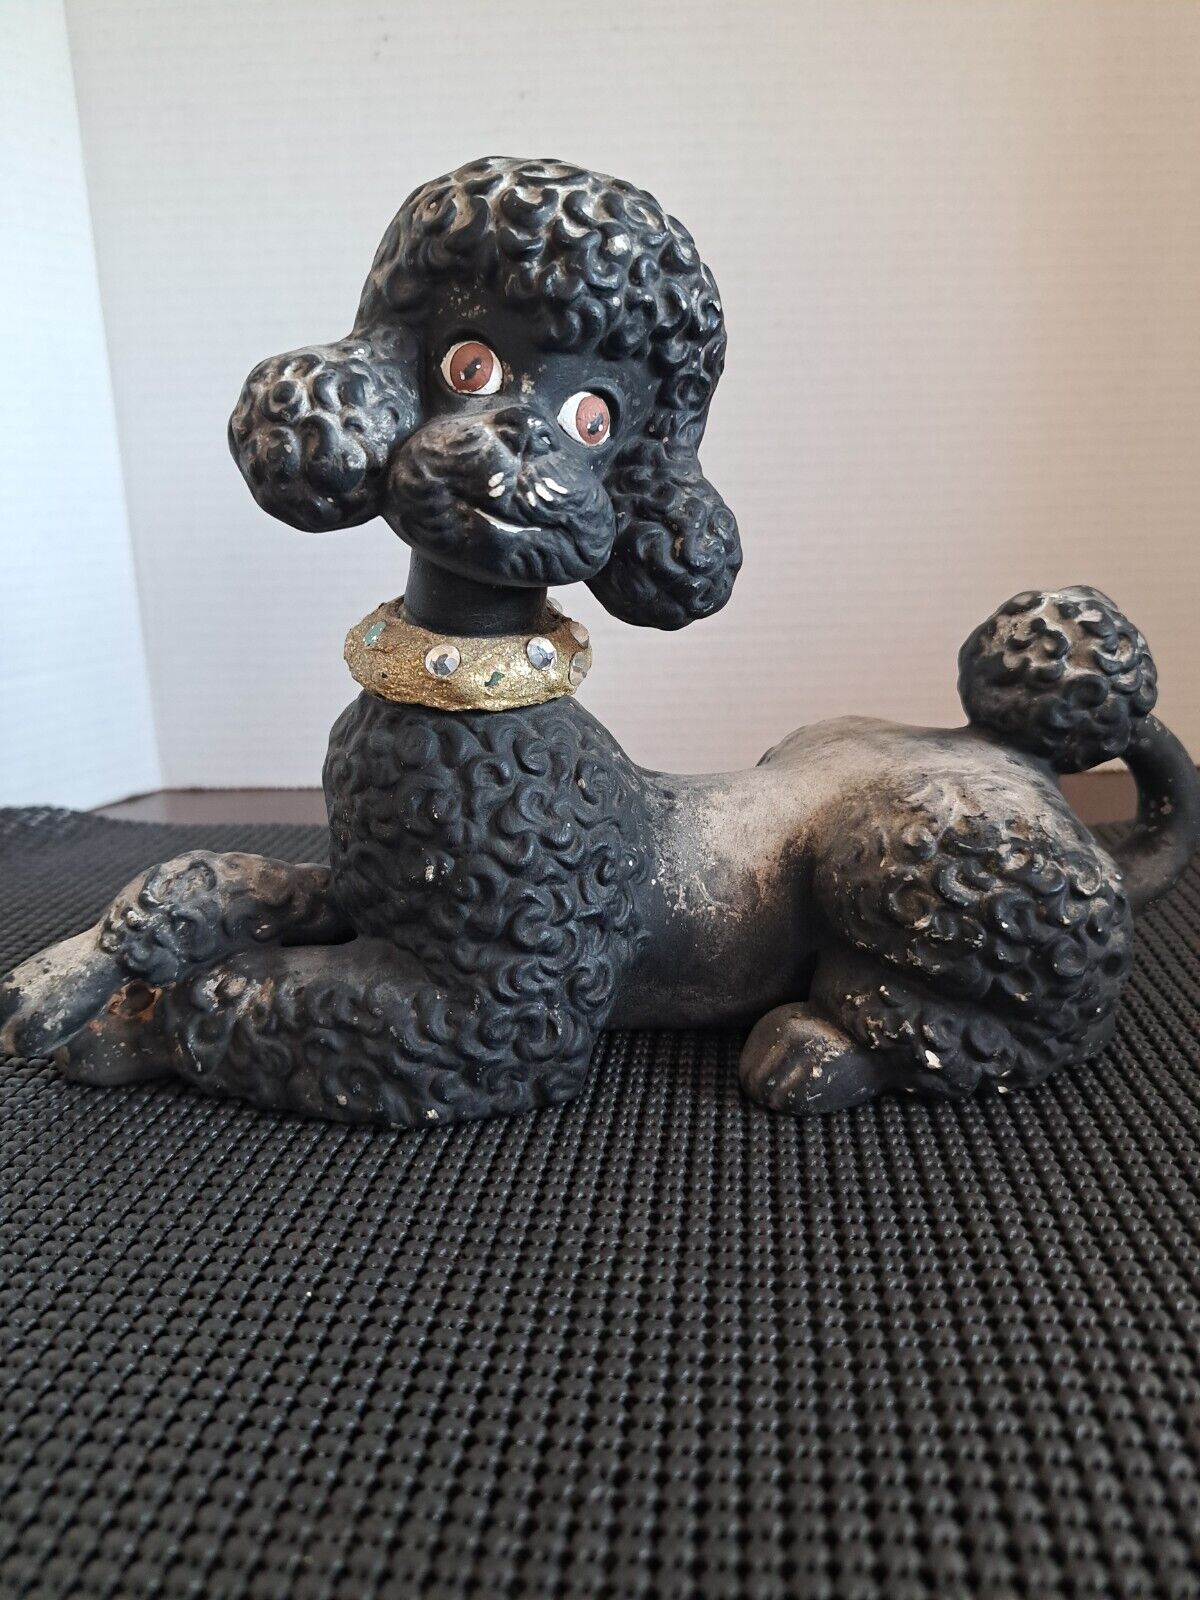 Vintage 1960s Black Poodle Figurine Statue Mold Ceramic